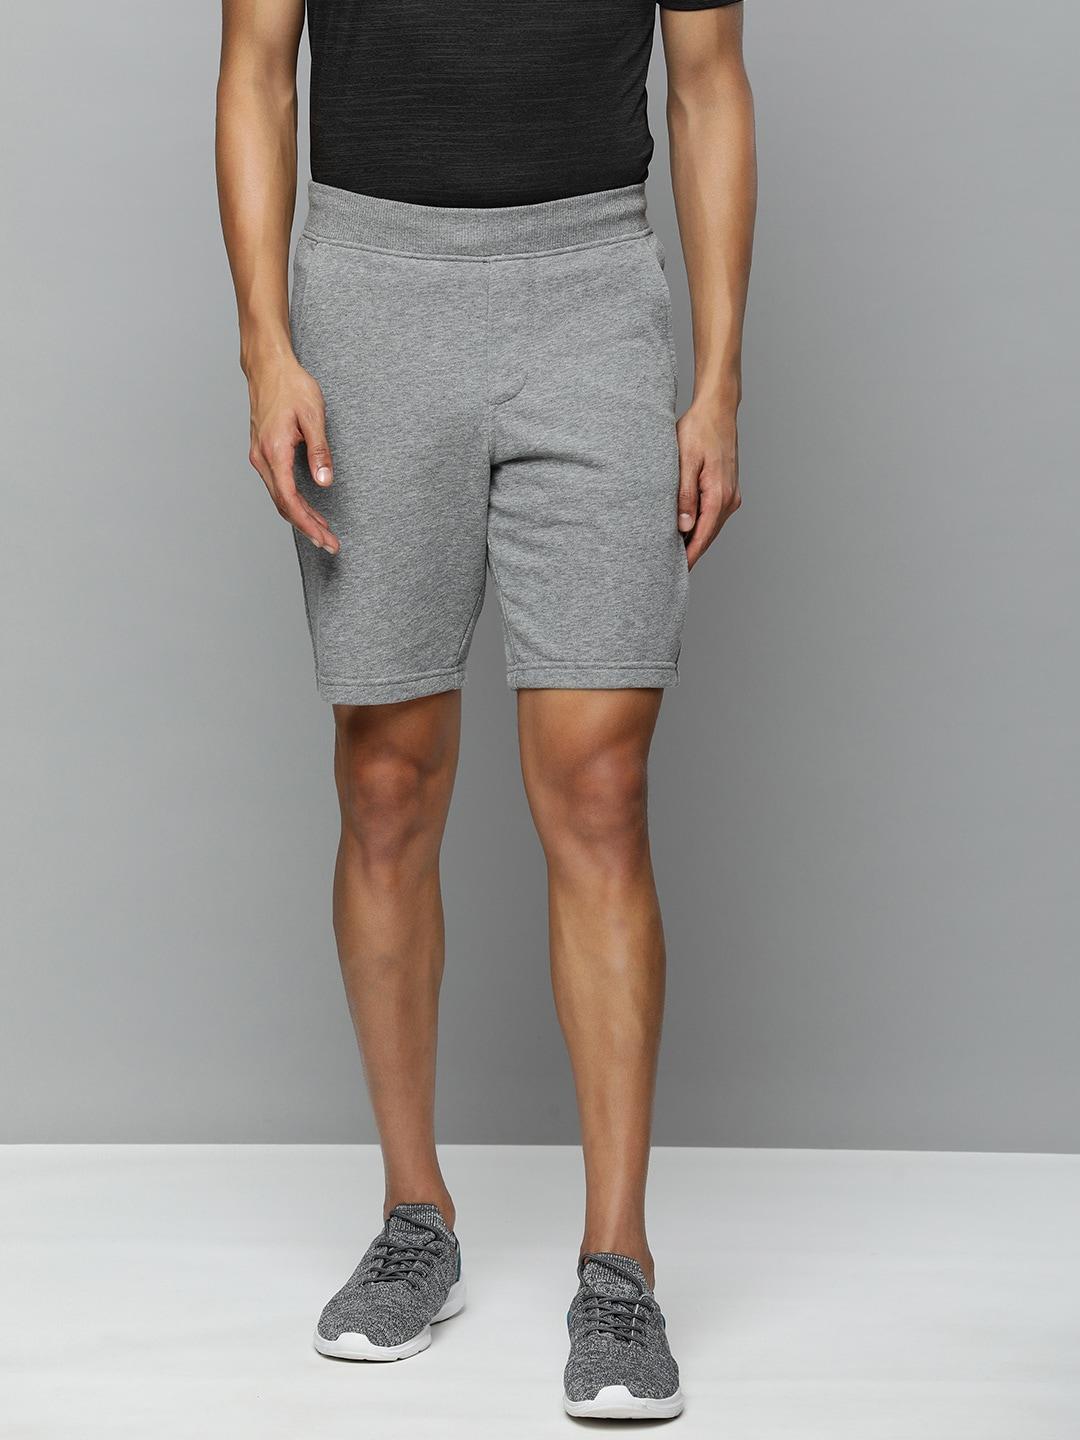 skechers-men-grey-sports-shorts-with-e-dry-technology-technology